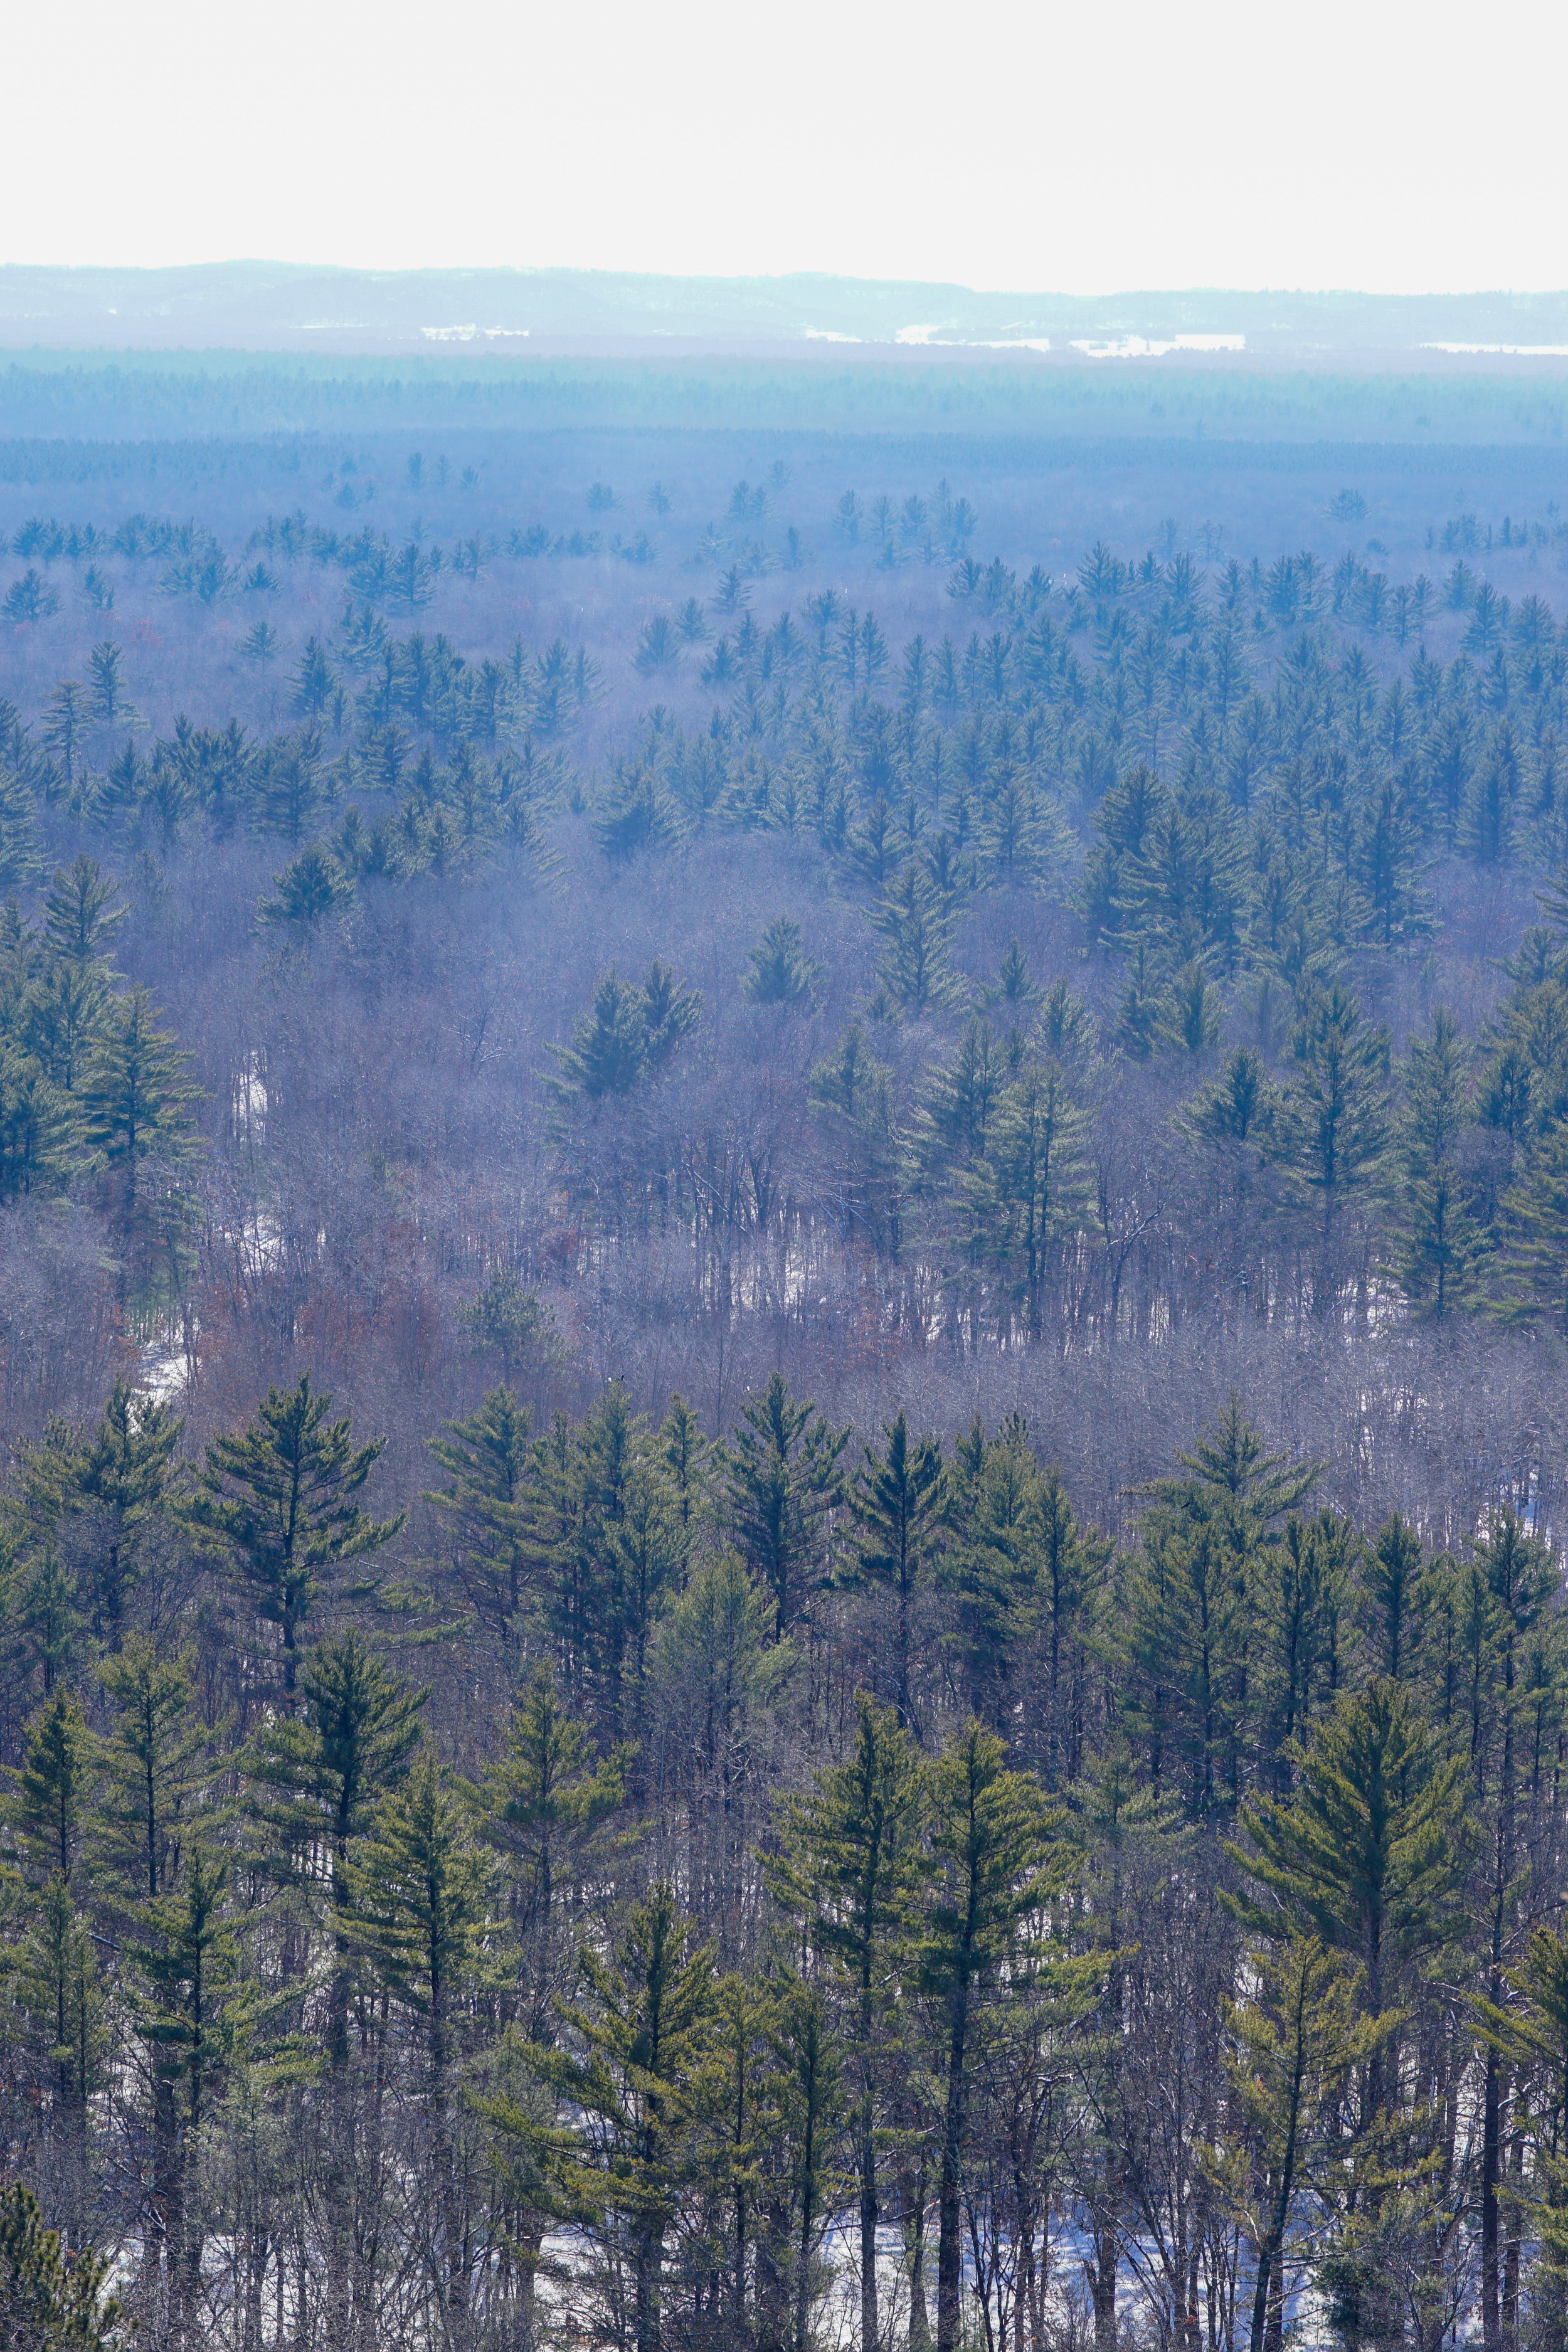 Castle Mound Pine Forest (#16) - 2/26/22